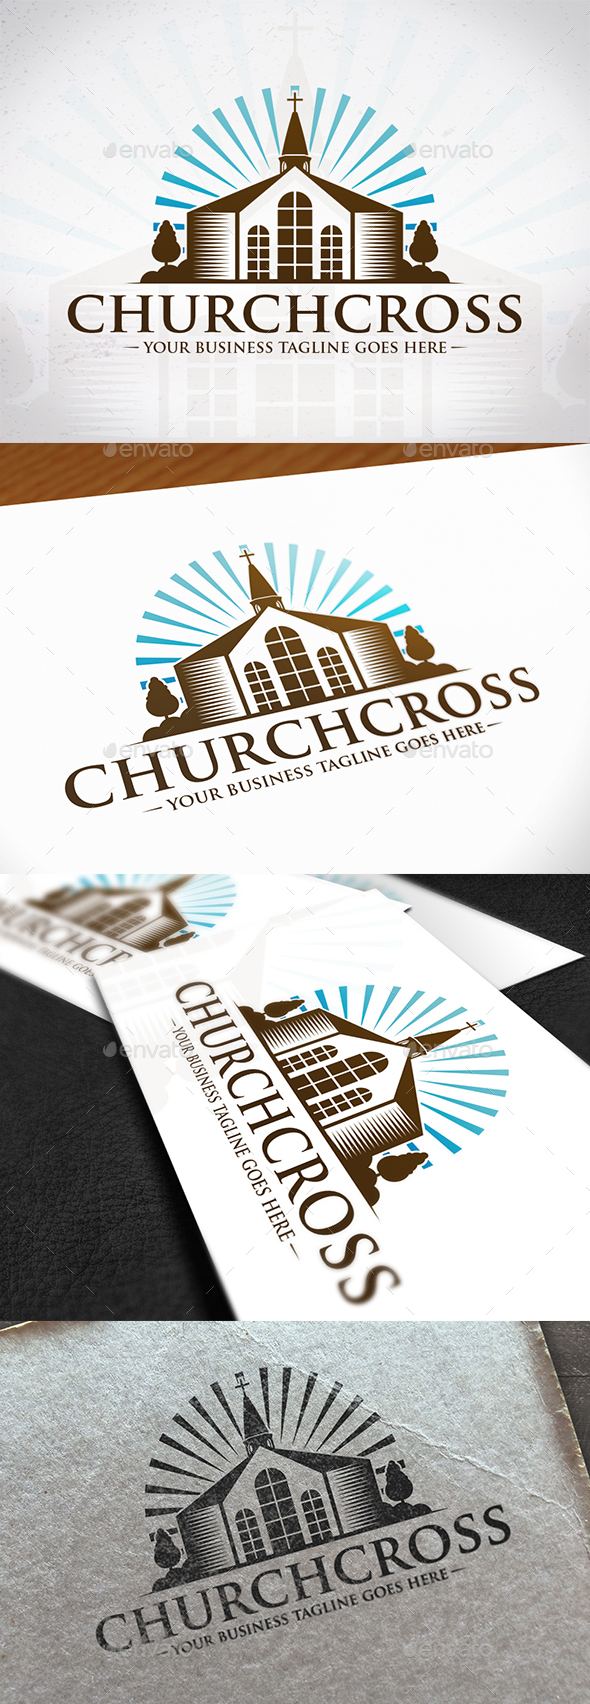 Cross Church Creative Logo